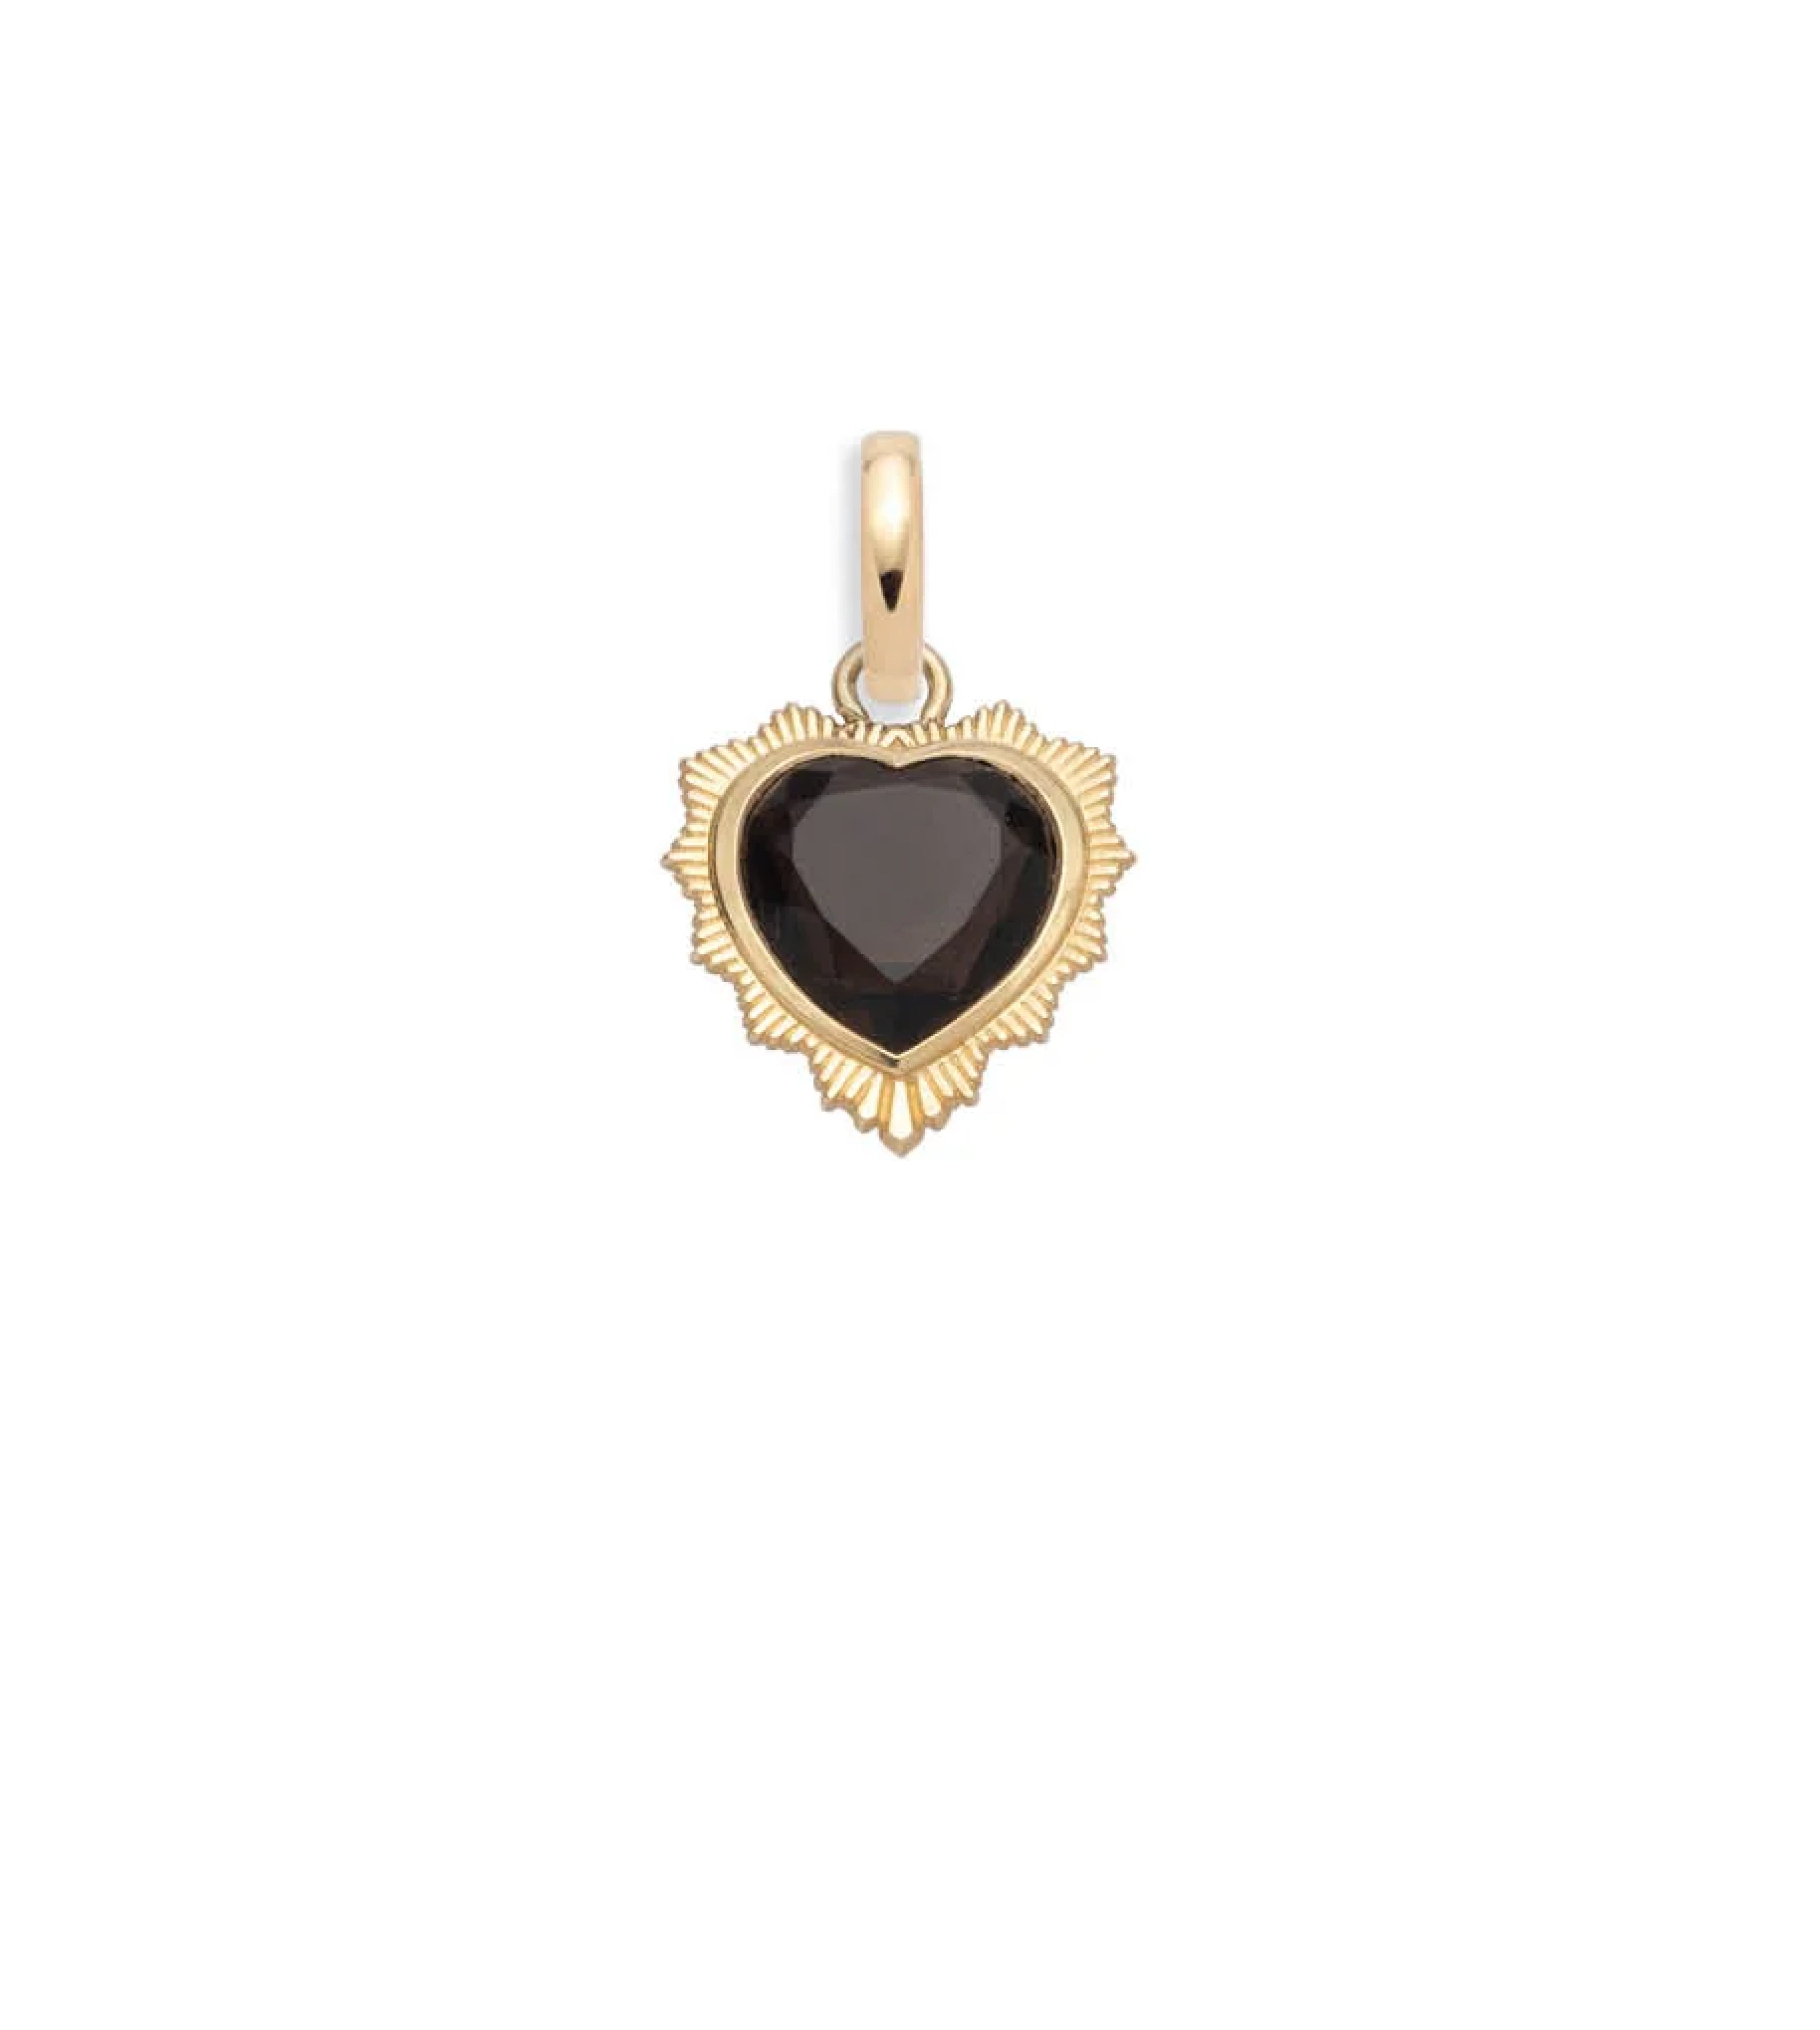 Gemstone Heart - Love : Smoky Quartz Medallion with Oval Pushgate